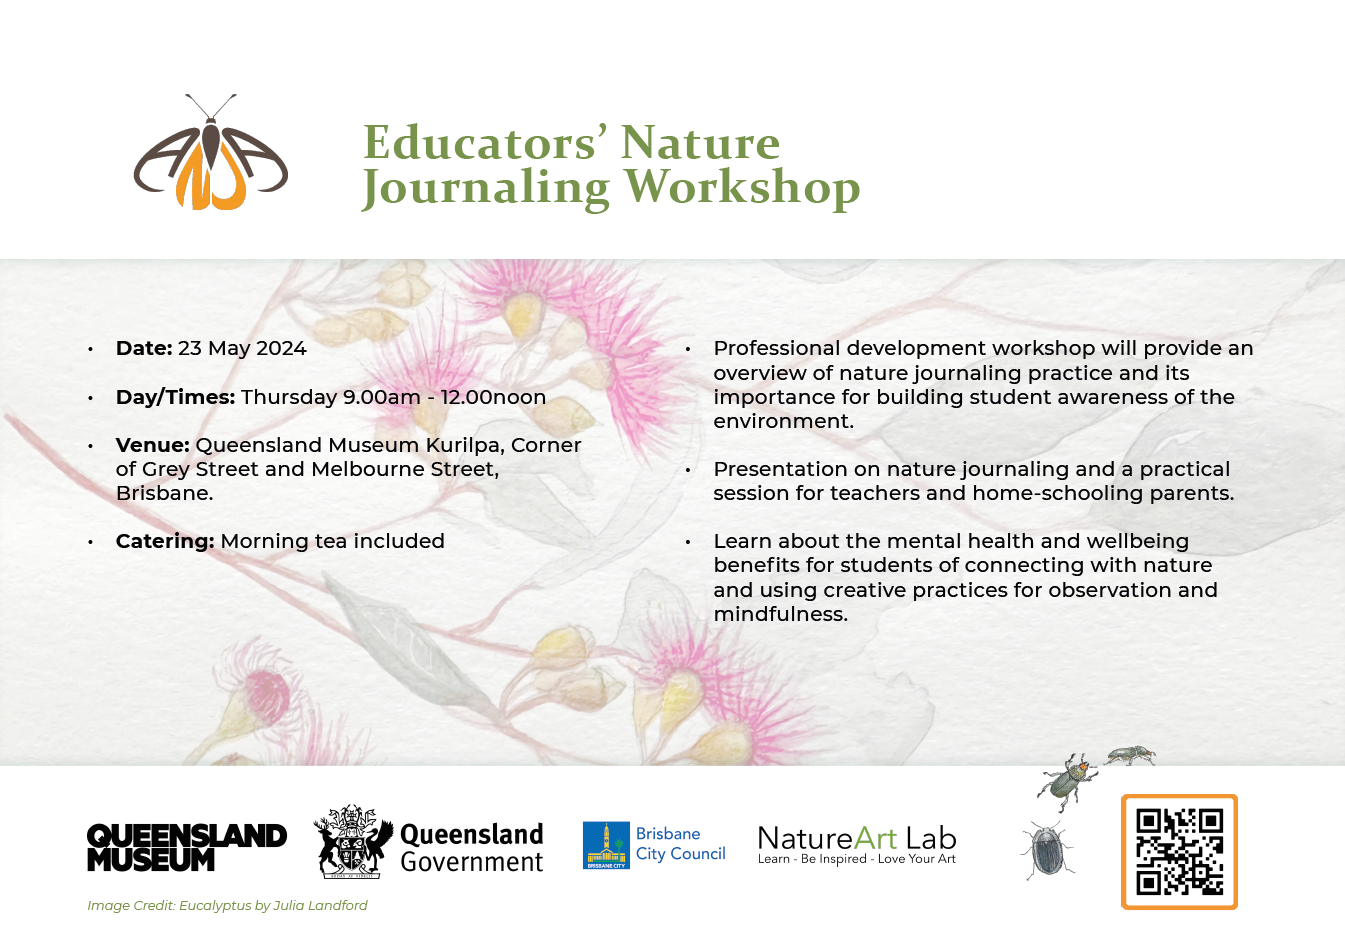 2024 Inaugural Australian Nature Journaling Conference